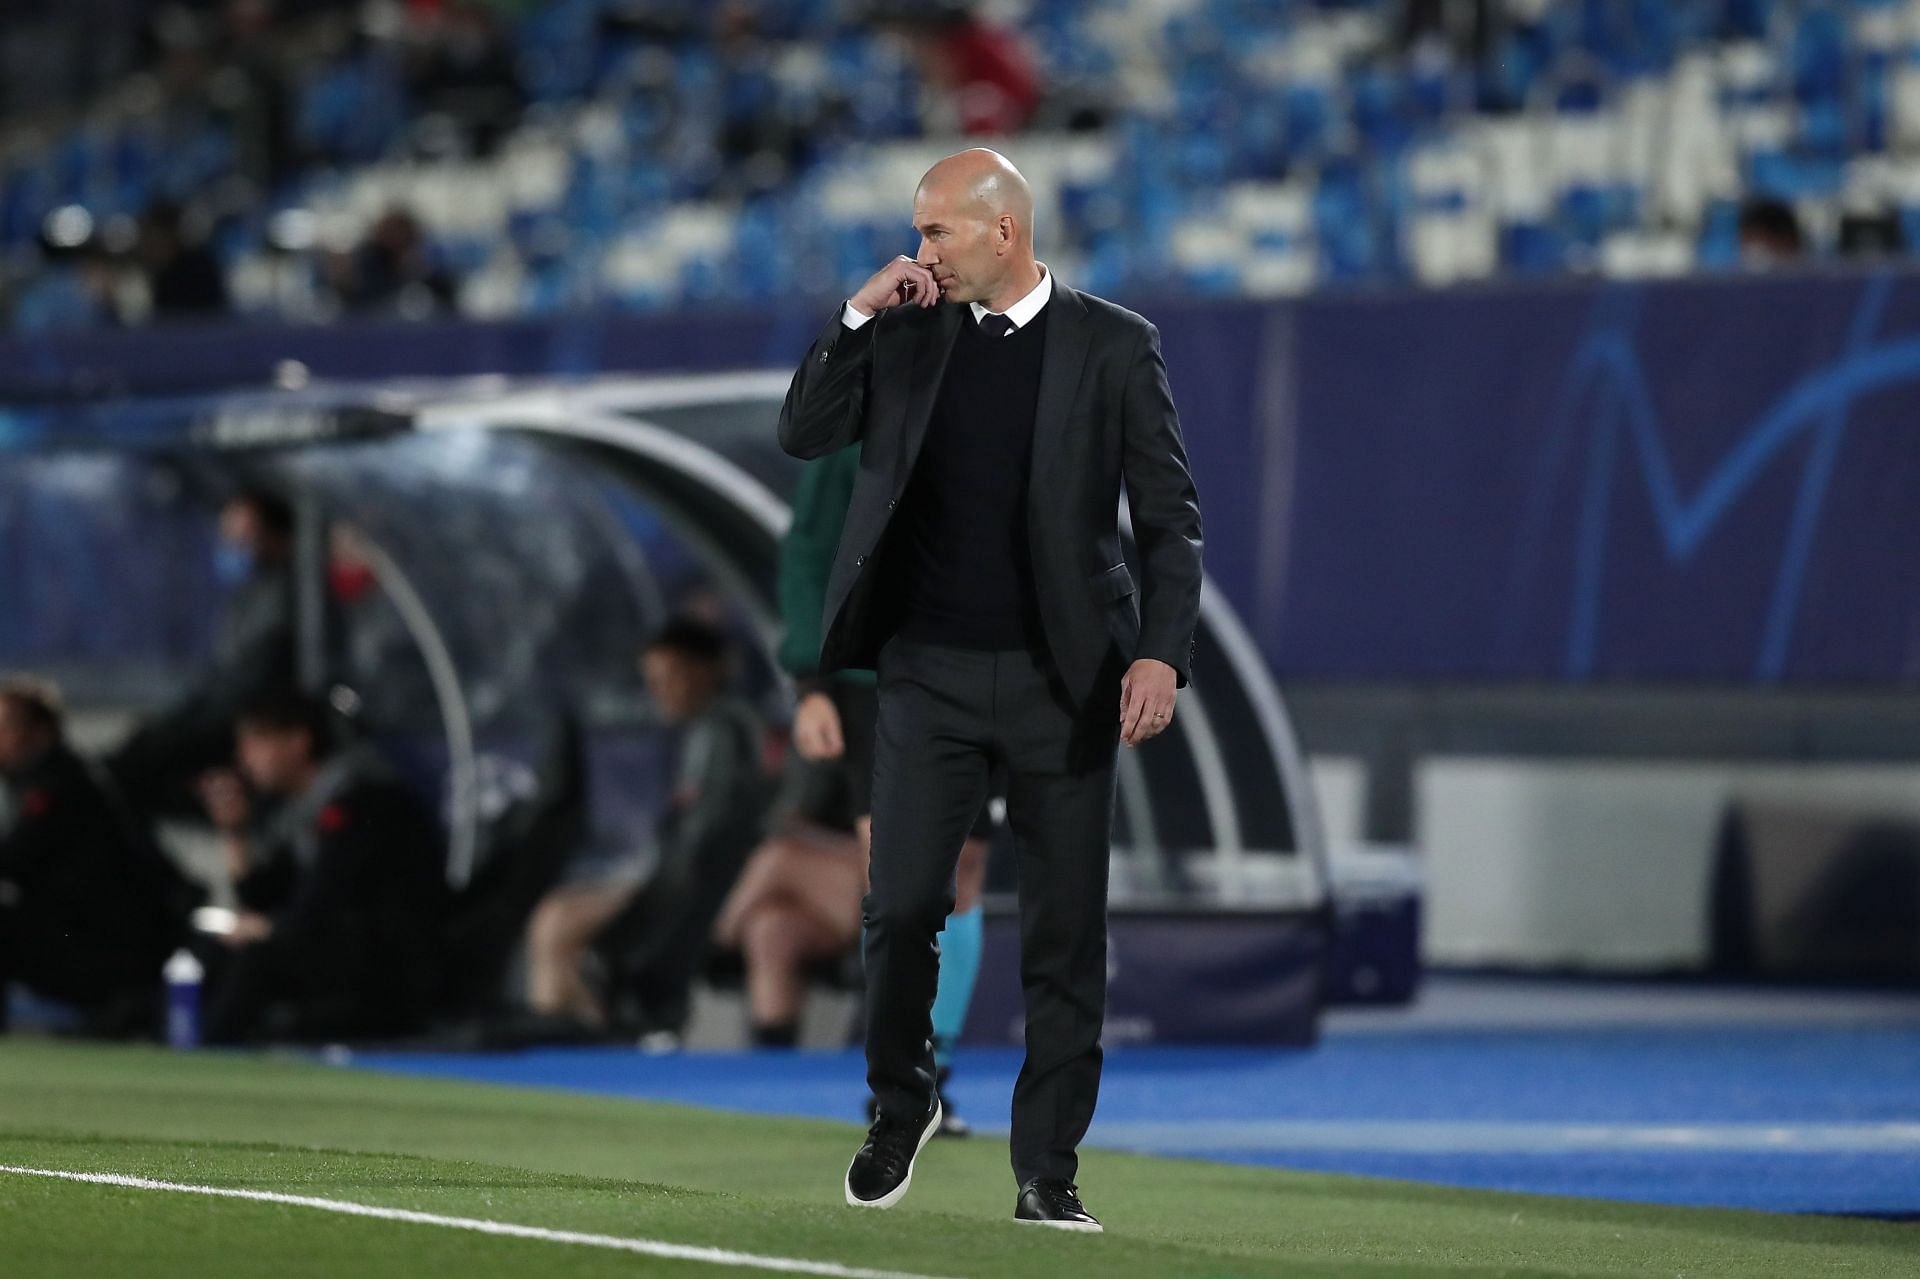 Zinedine Zidane could be an option to replace Erik ten Hag.